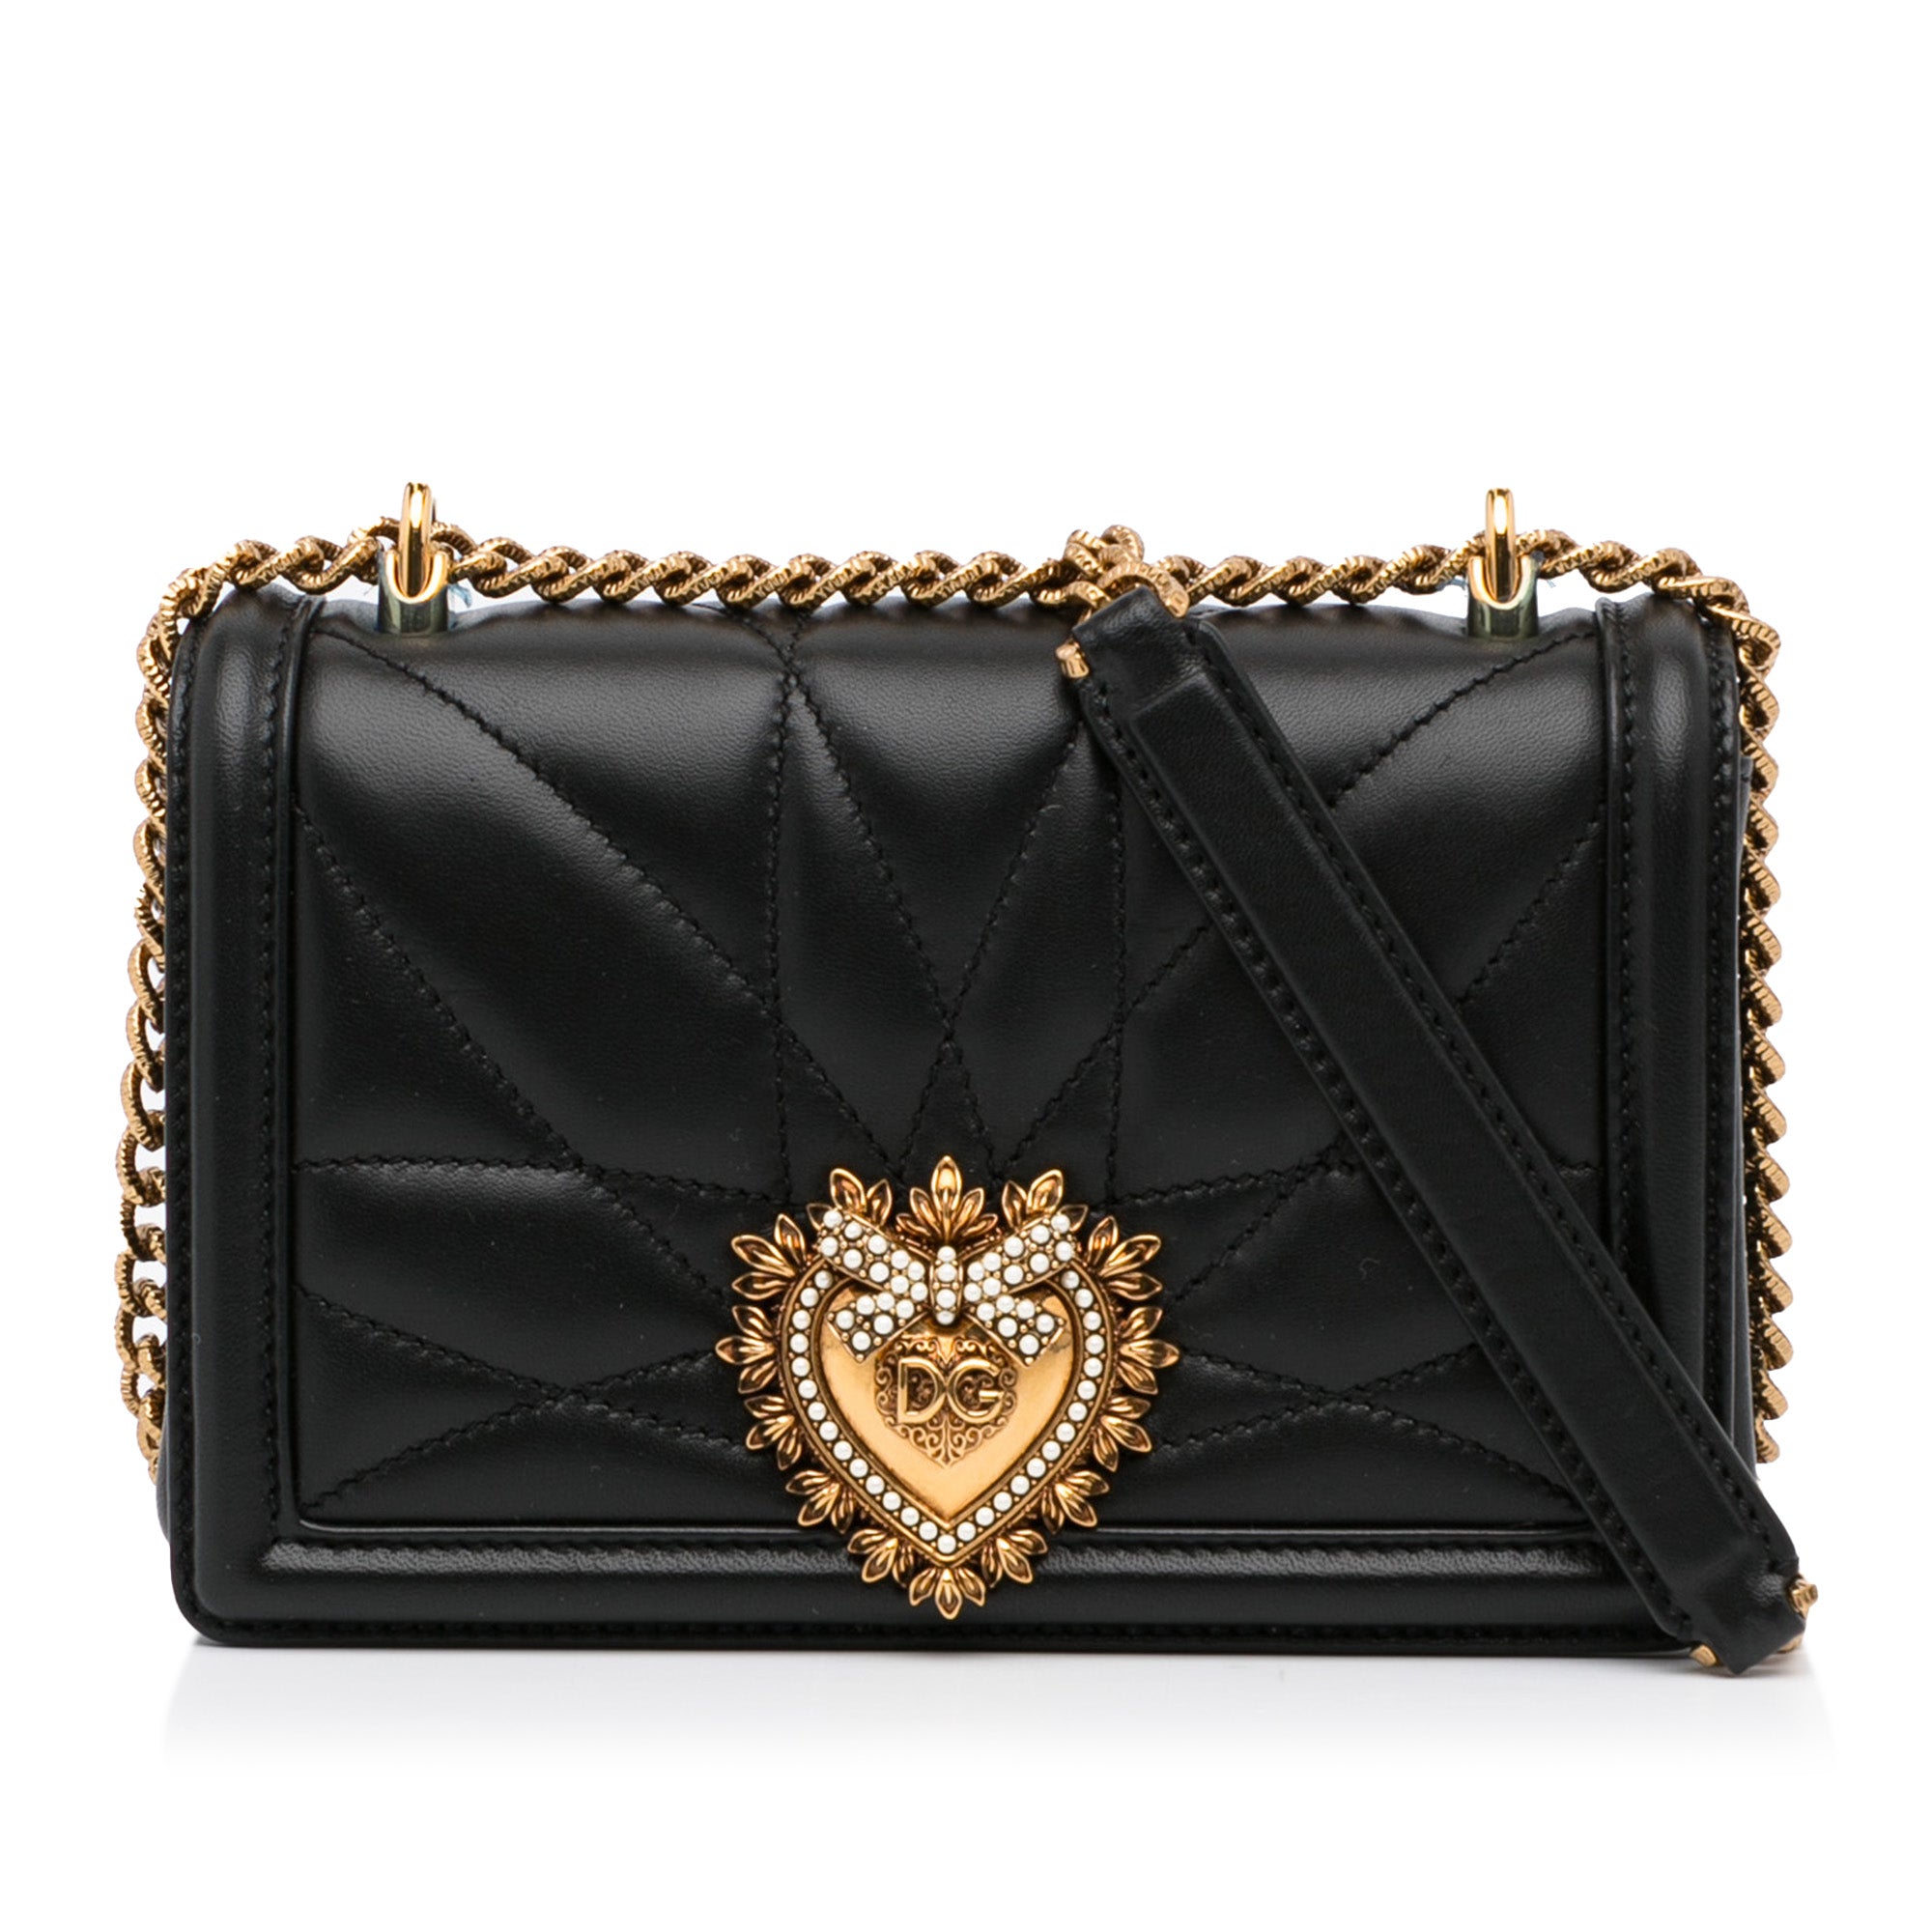 Women's Mini Devotion Bag by Dolce & Gabbana